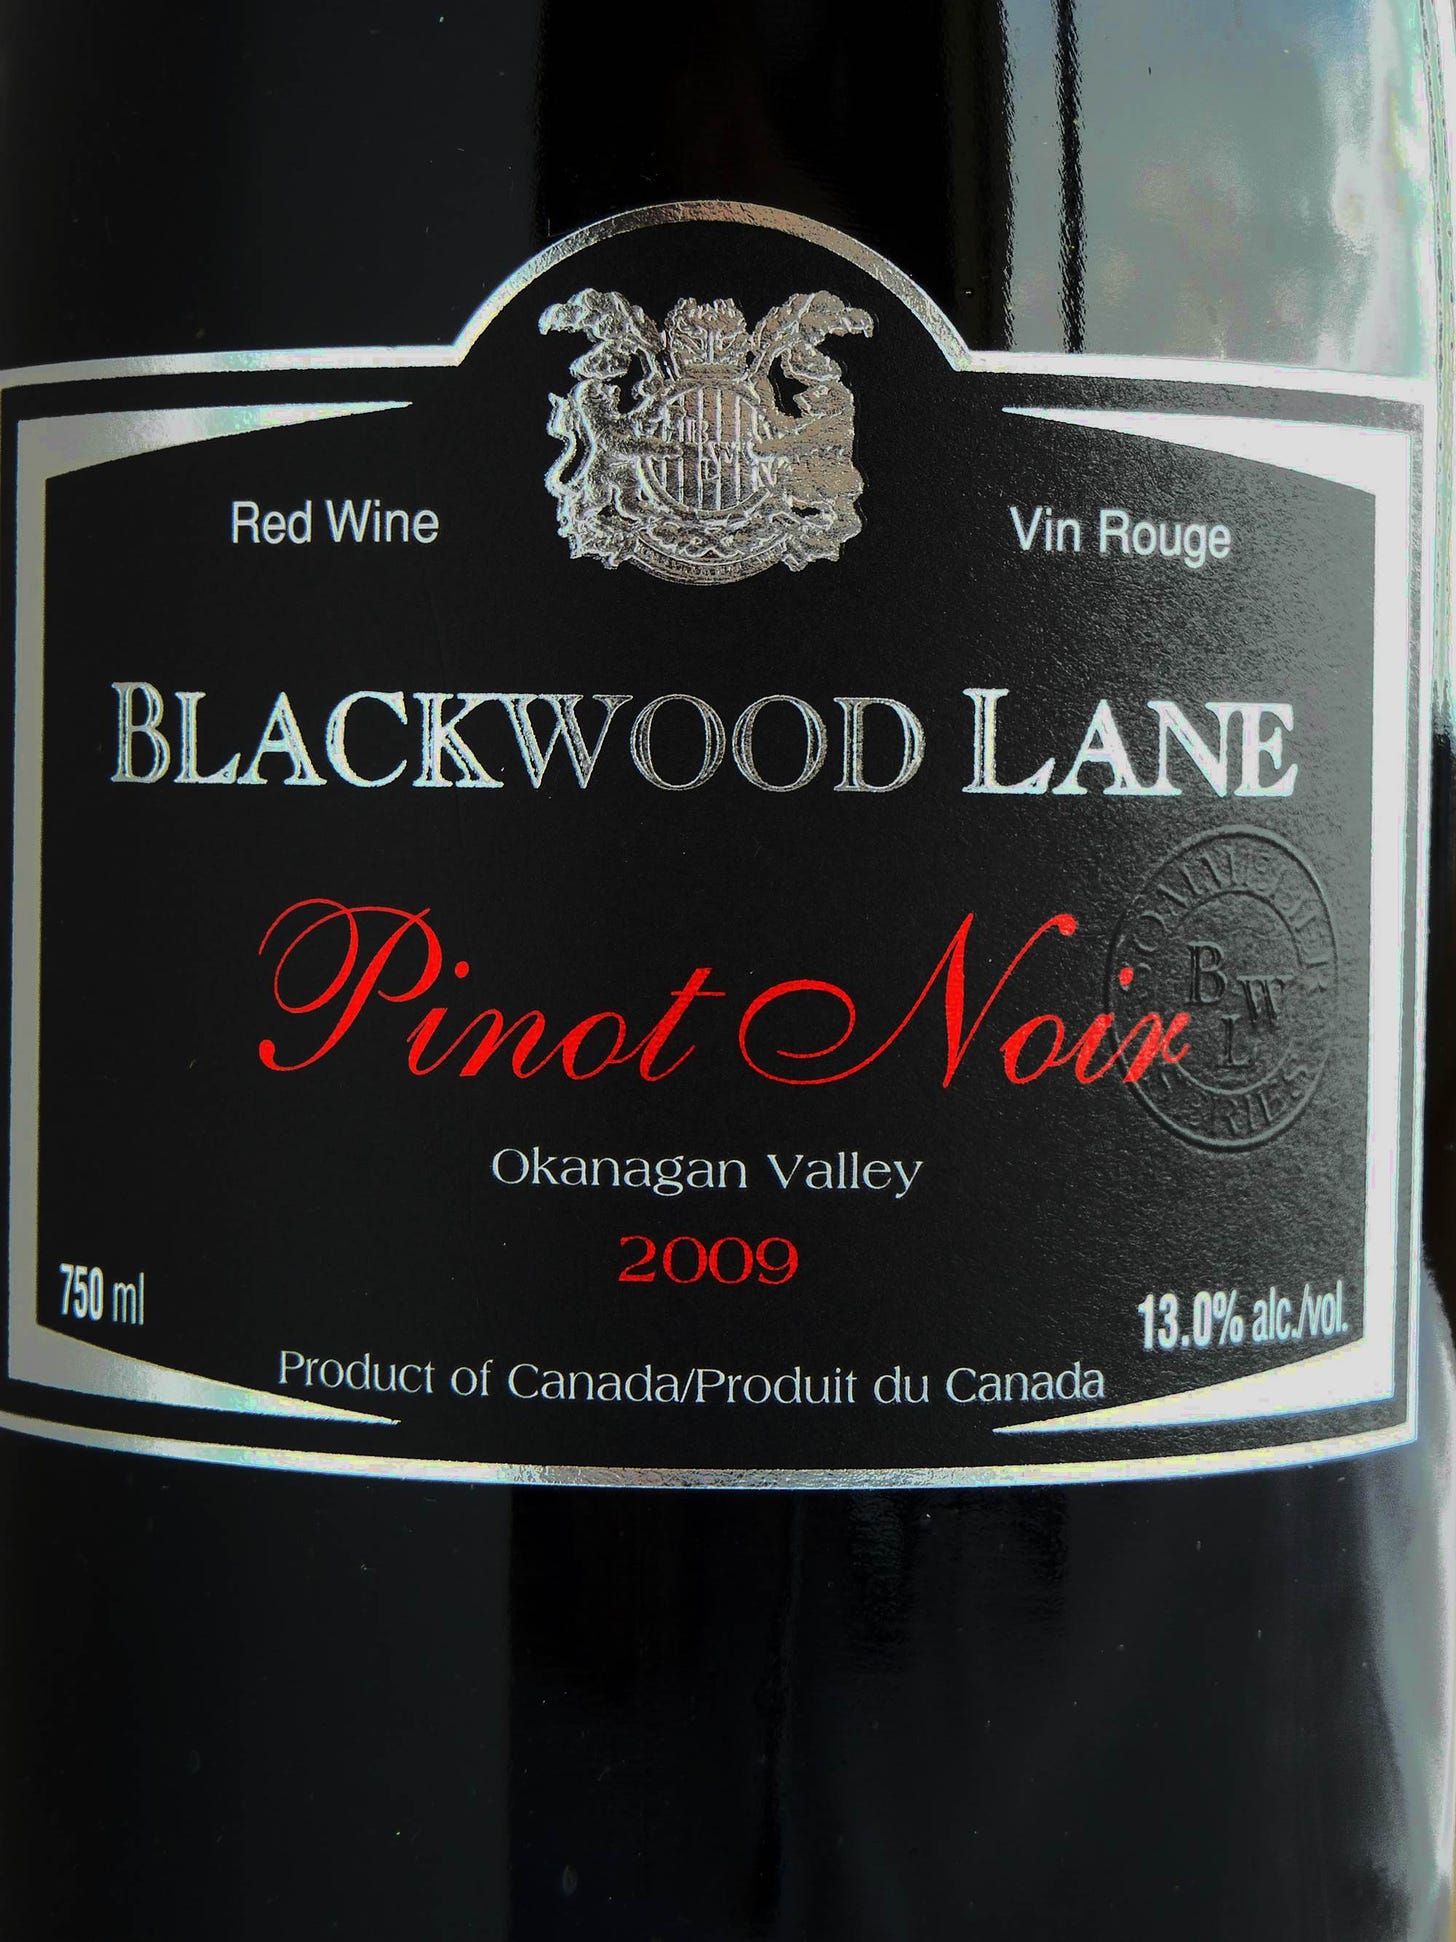 Blackwood Lane Pinot Noir 2009 Label - BC Pinot Noir Tasting Review 15